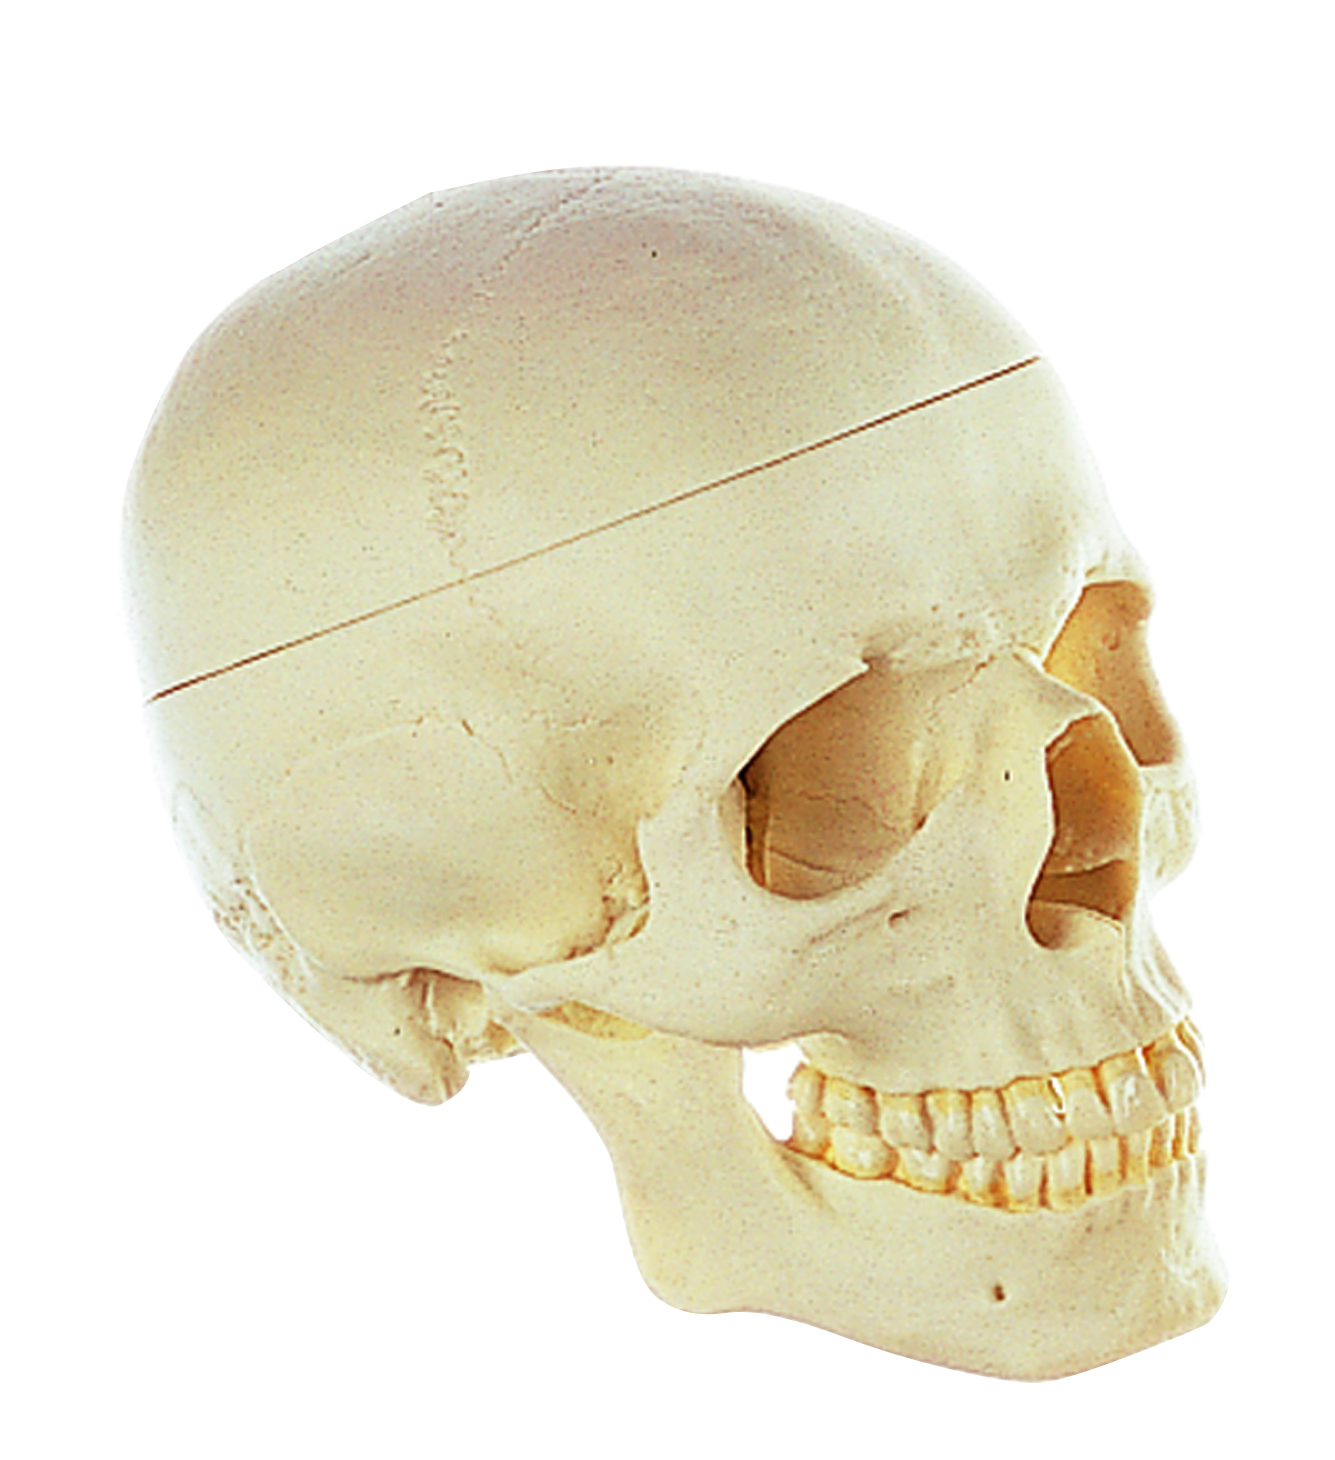 Artificial Human Skull (Separates Into 3 Parts)